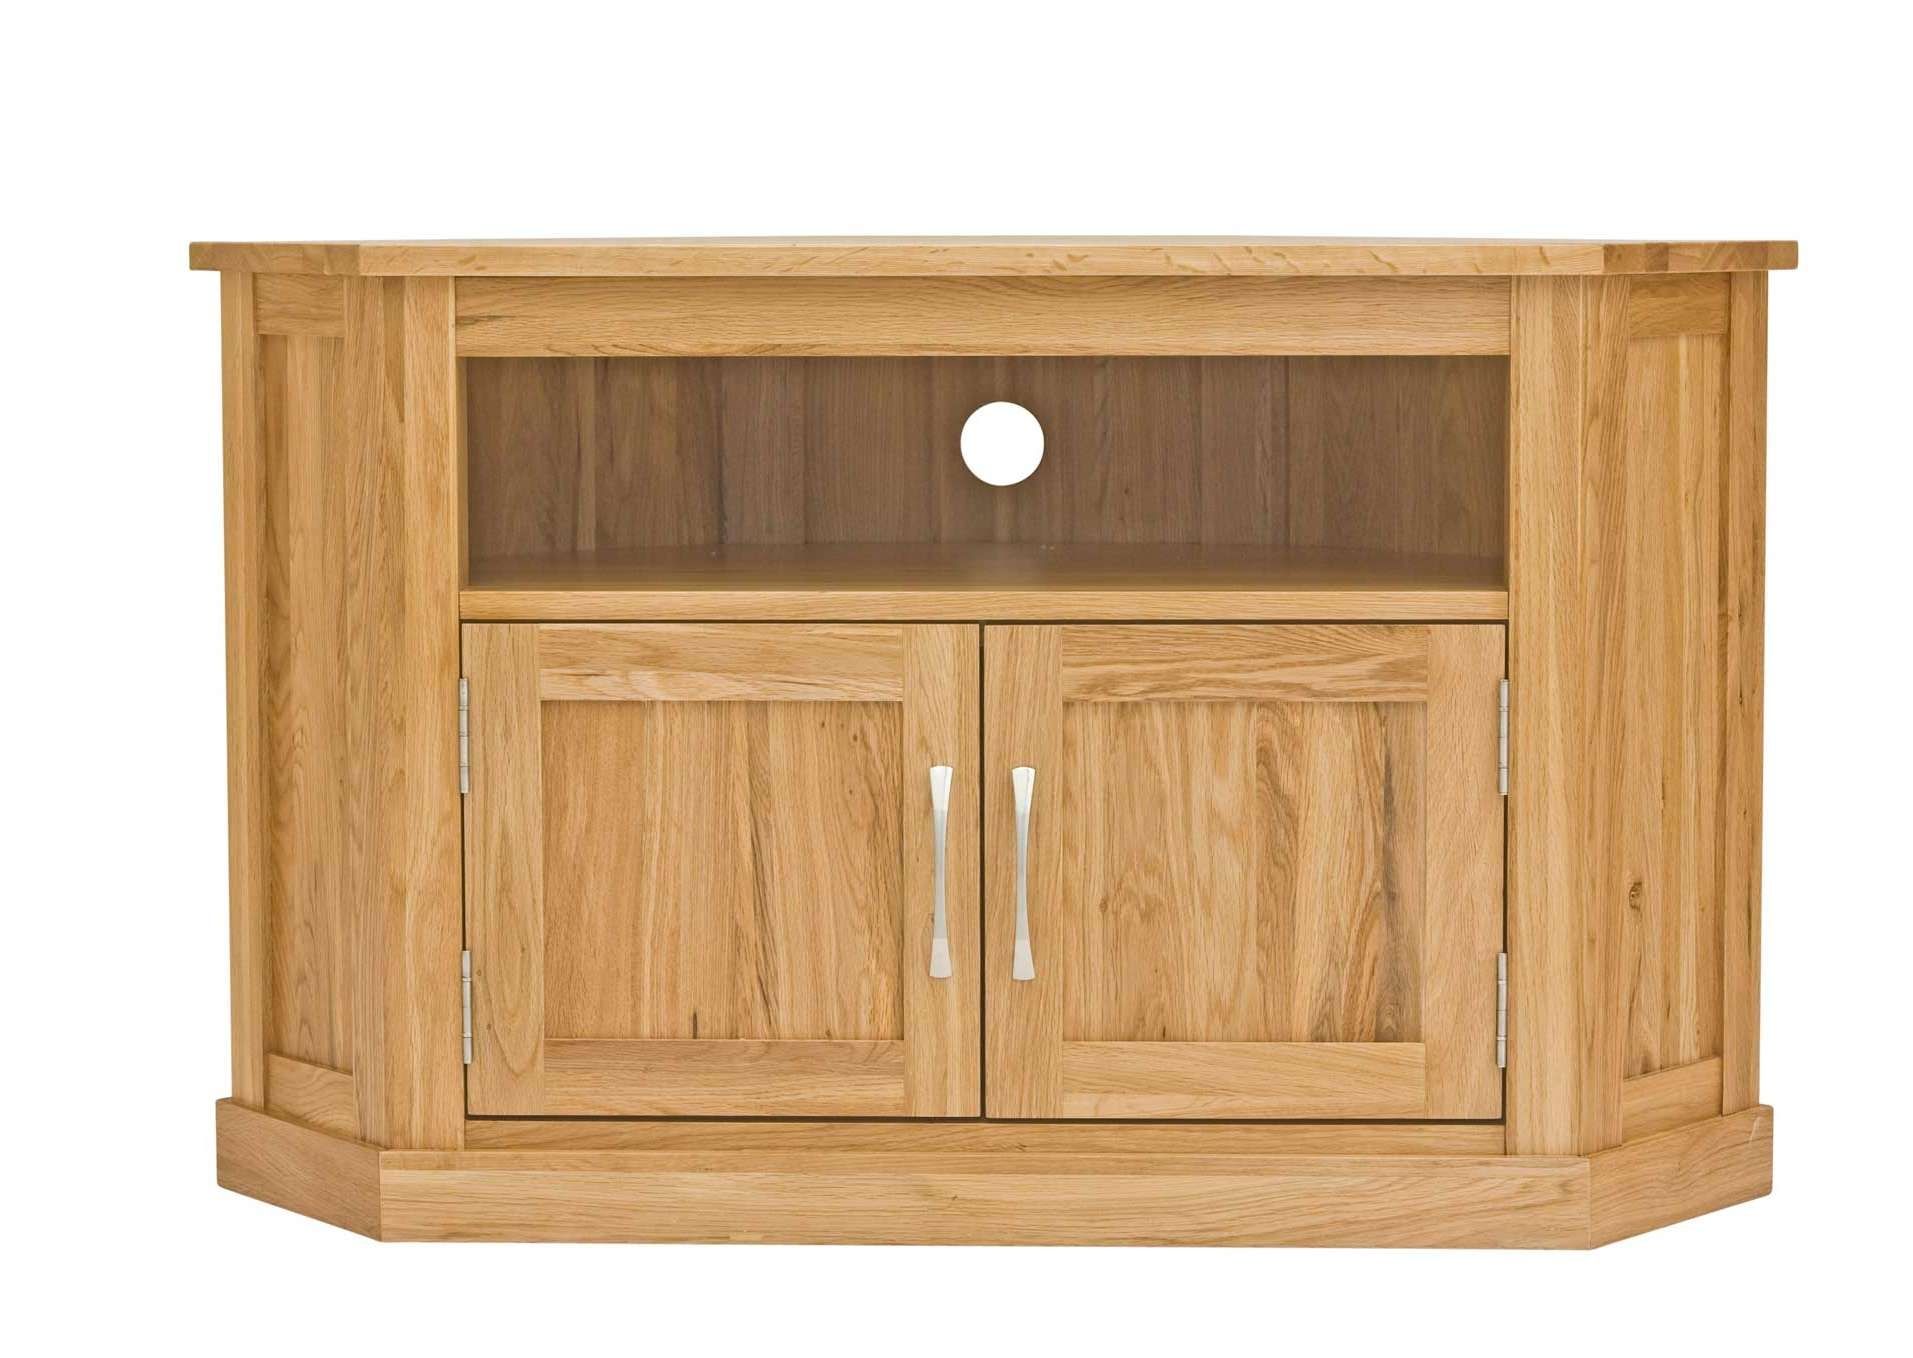 Classic Oak Corner Television Cabinet | Hampshire Furniture In Small Oak Corner Tv Stands (Gallery 7 of 15)